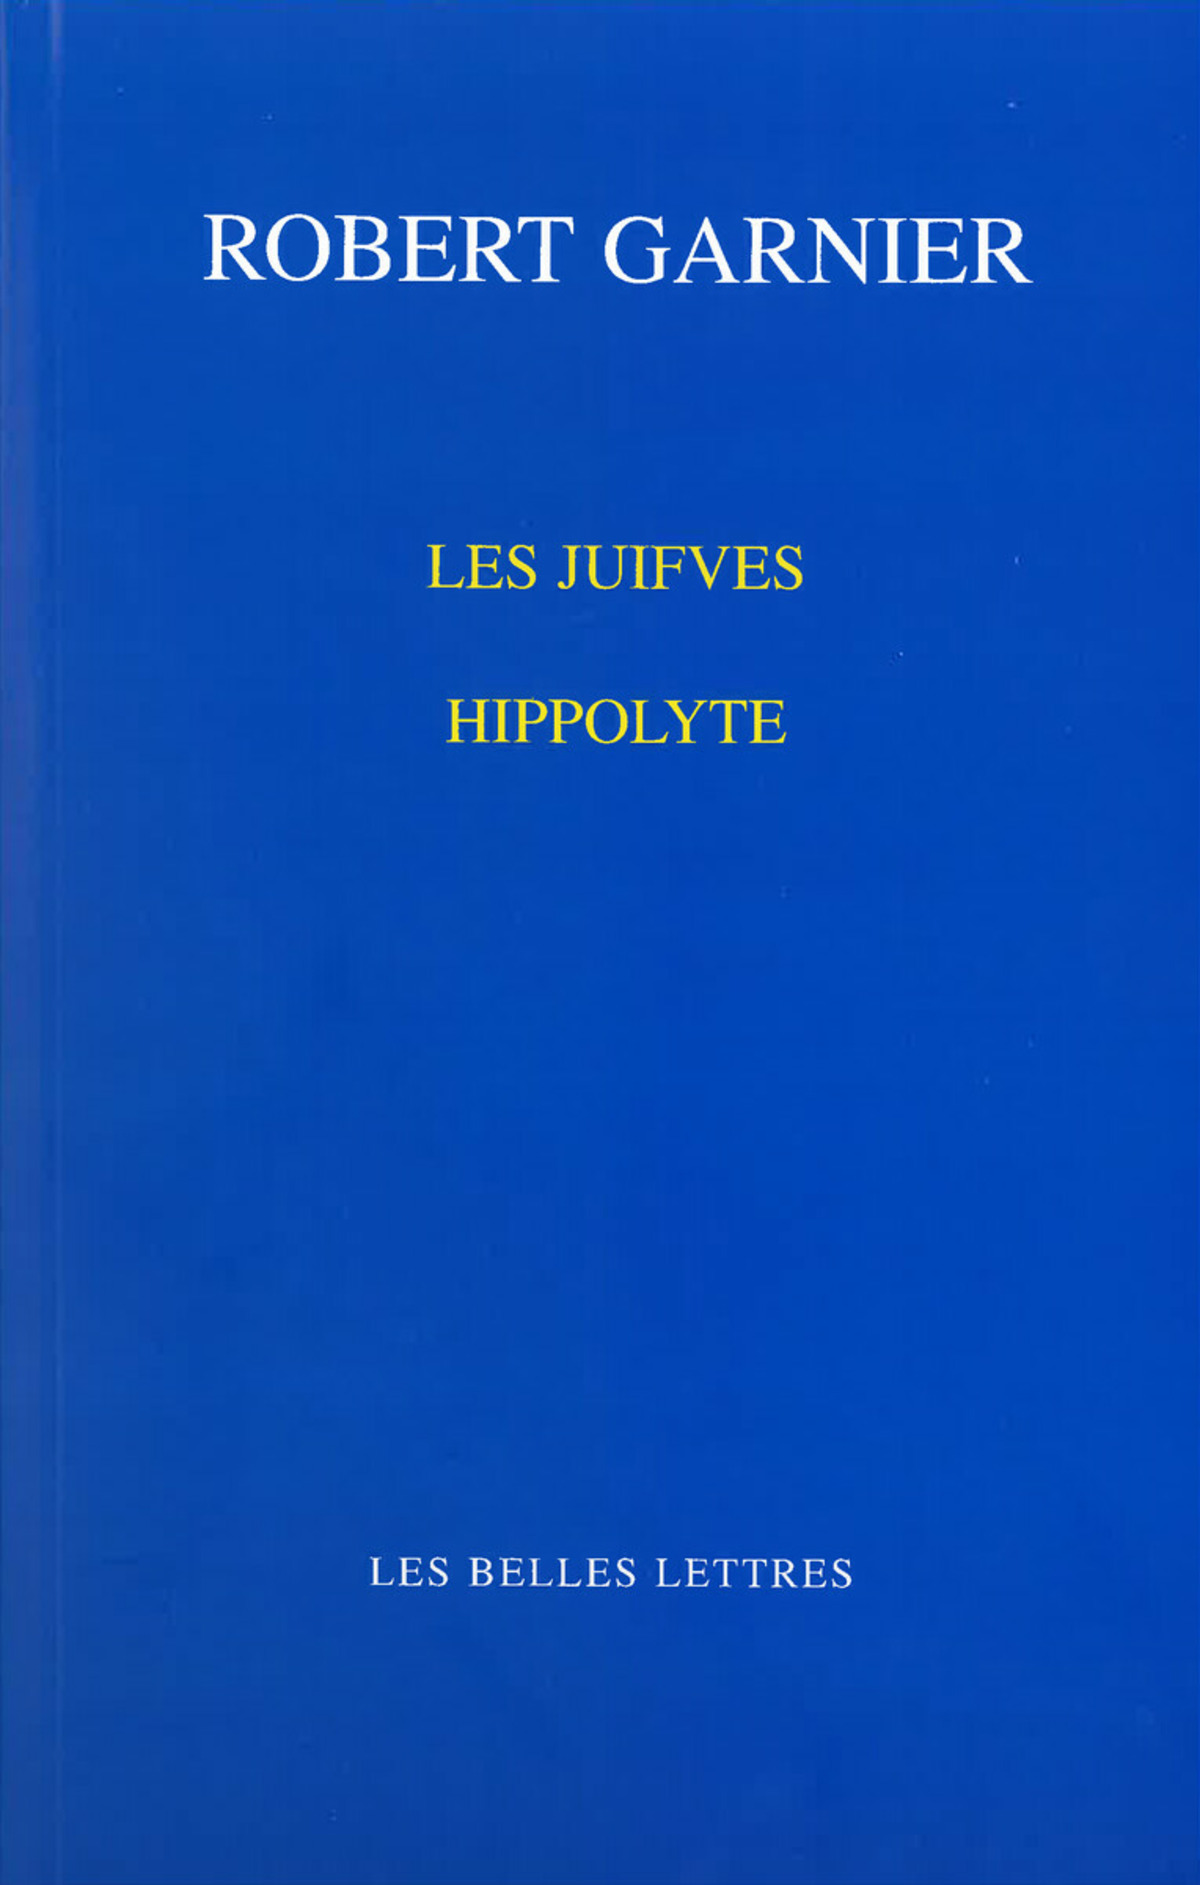 Les Juifves / Hippolyte